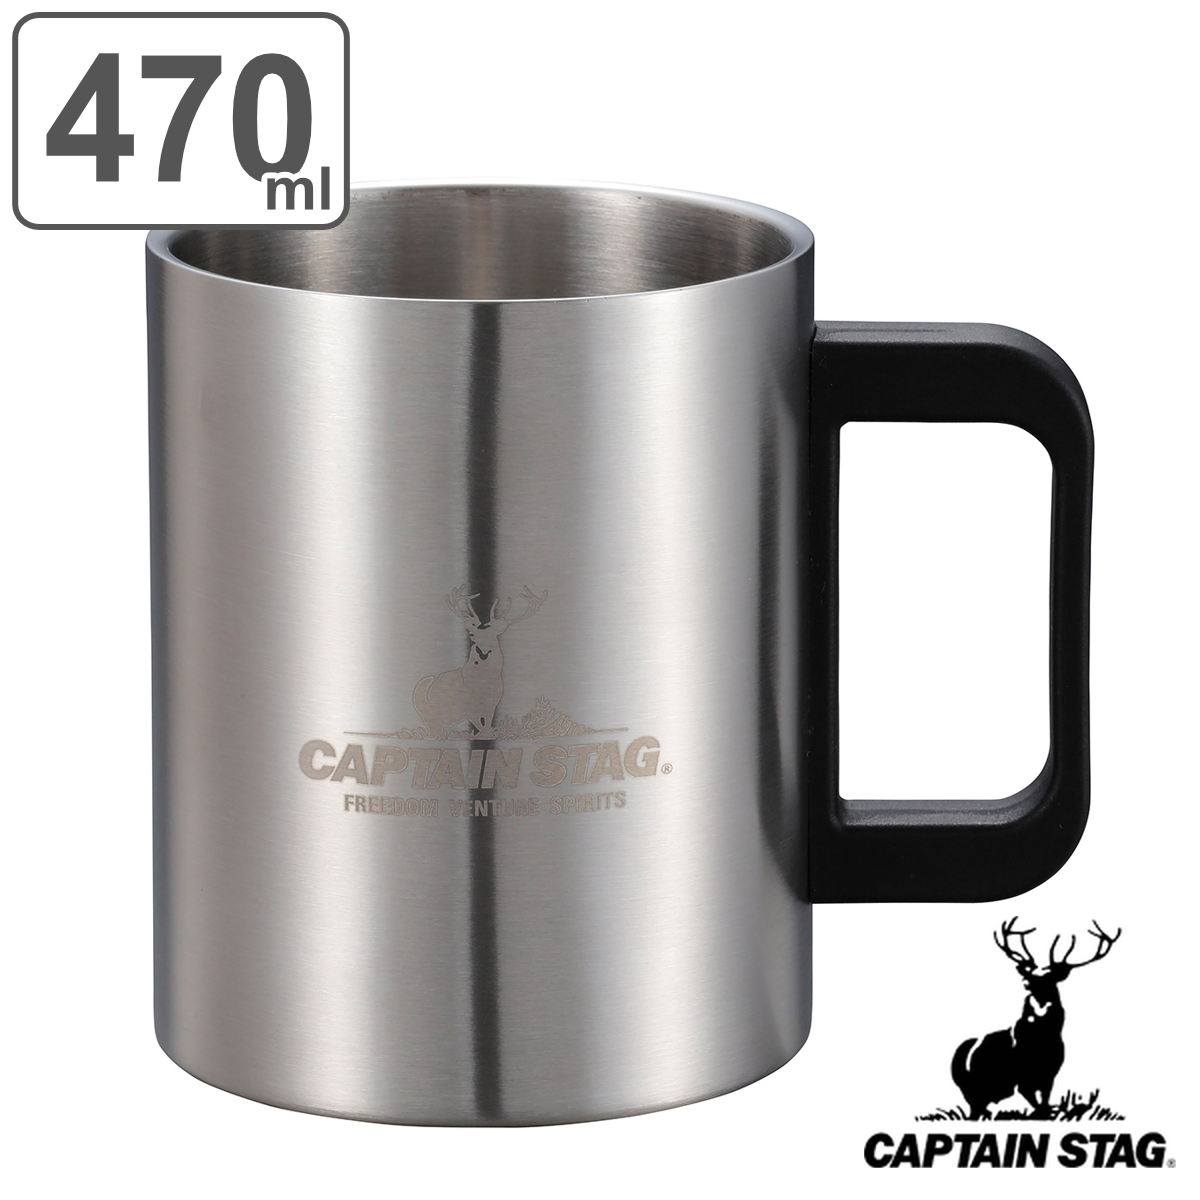 CAPTAIN STAG ステンレス製 マグカップ 3個 - バーベキュー・調理用品